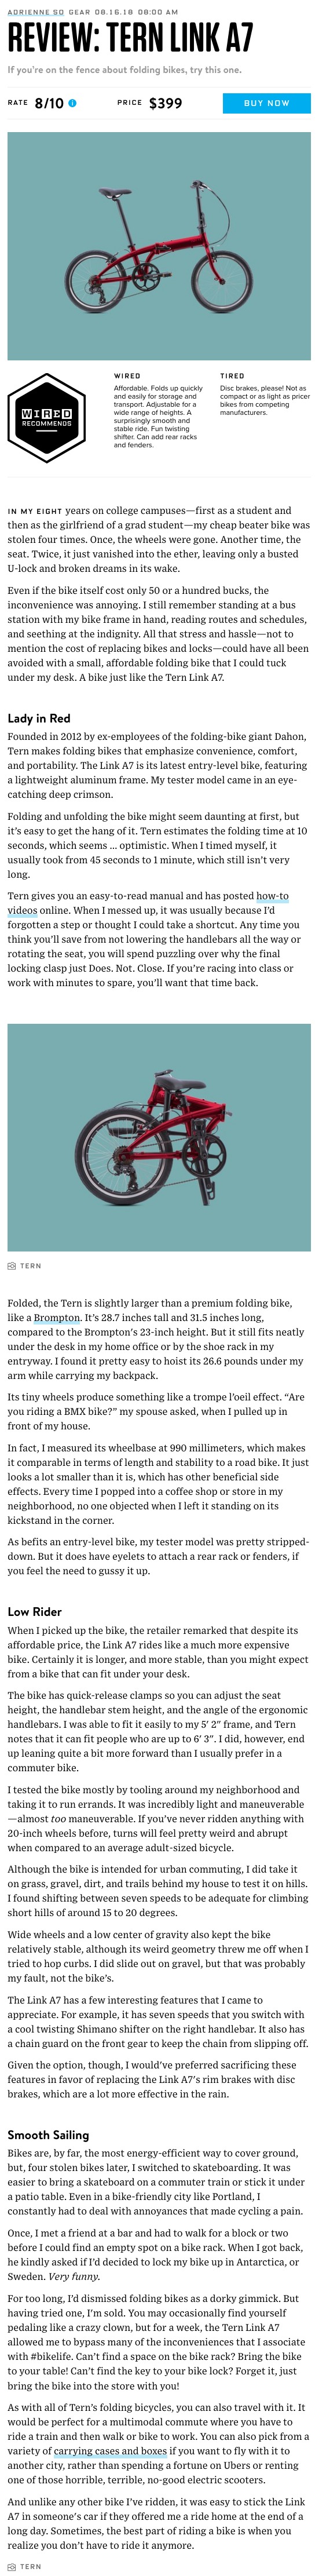 tern link a7 folding bike